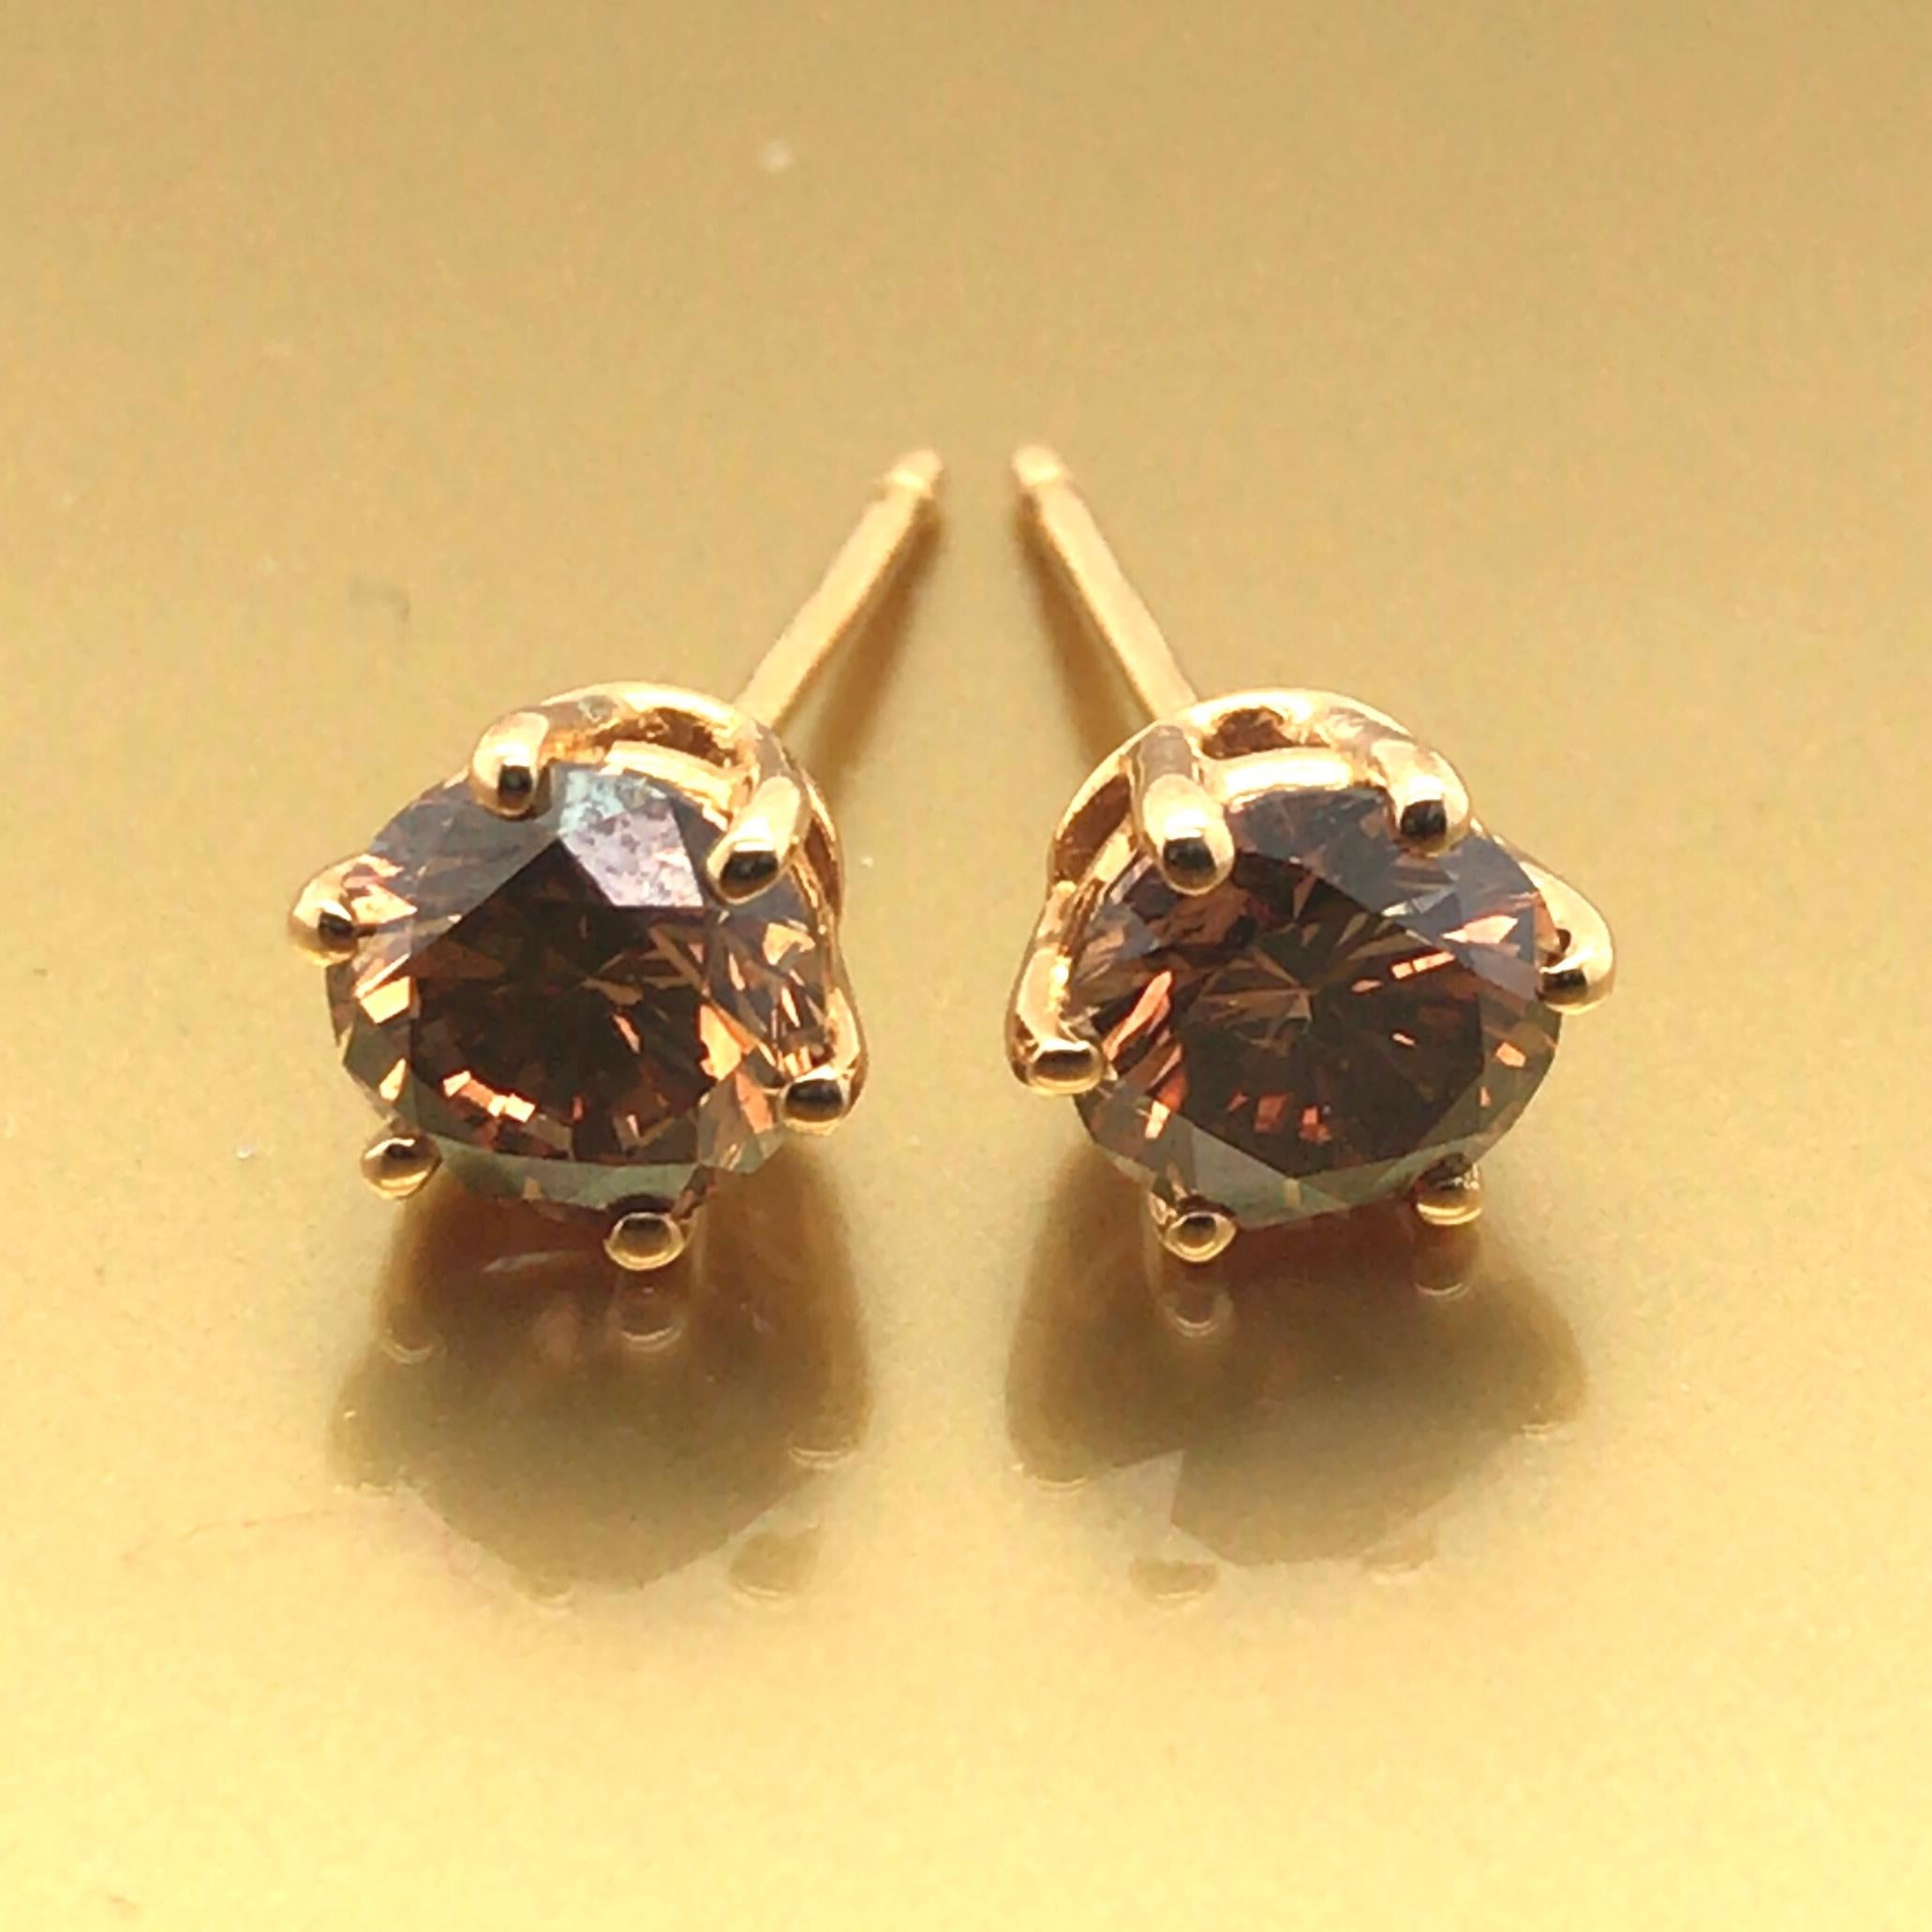 Brilliant Cut Striking 2.15 Carat Brown Diamond and Yellow Gold Stud Earrings